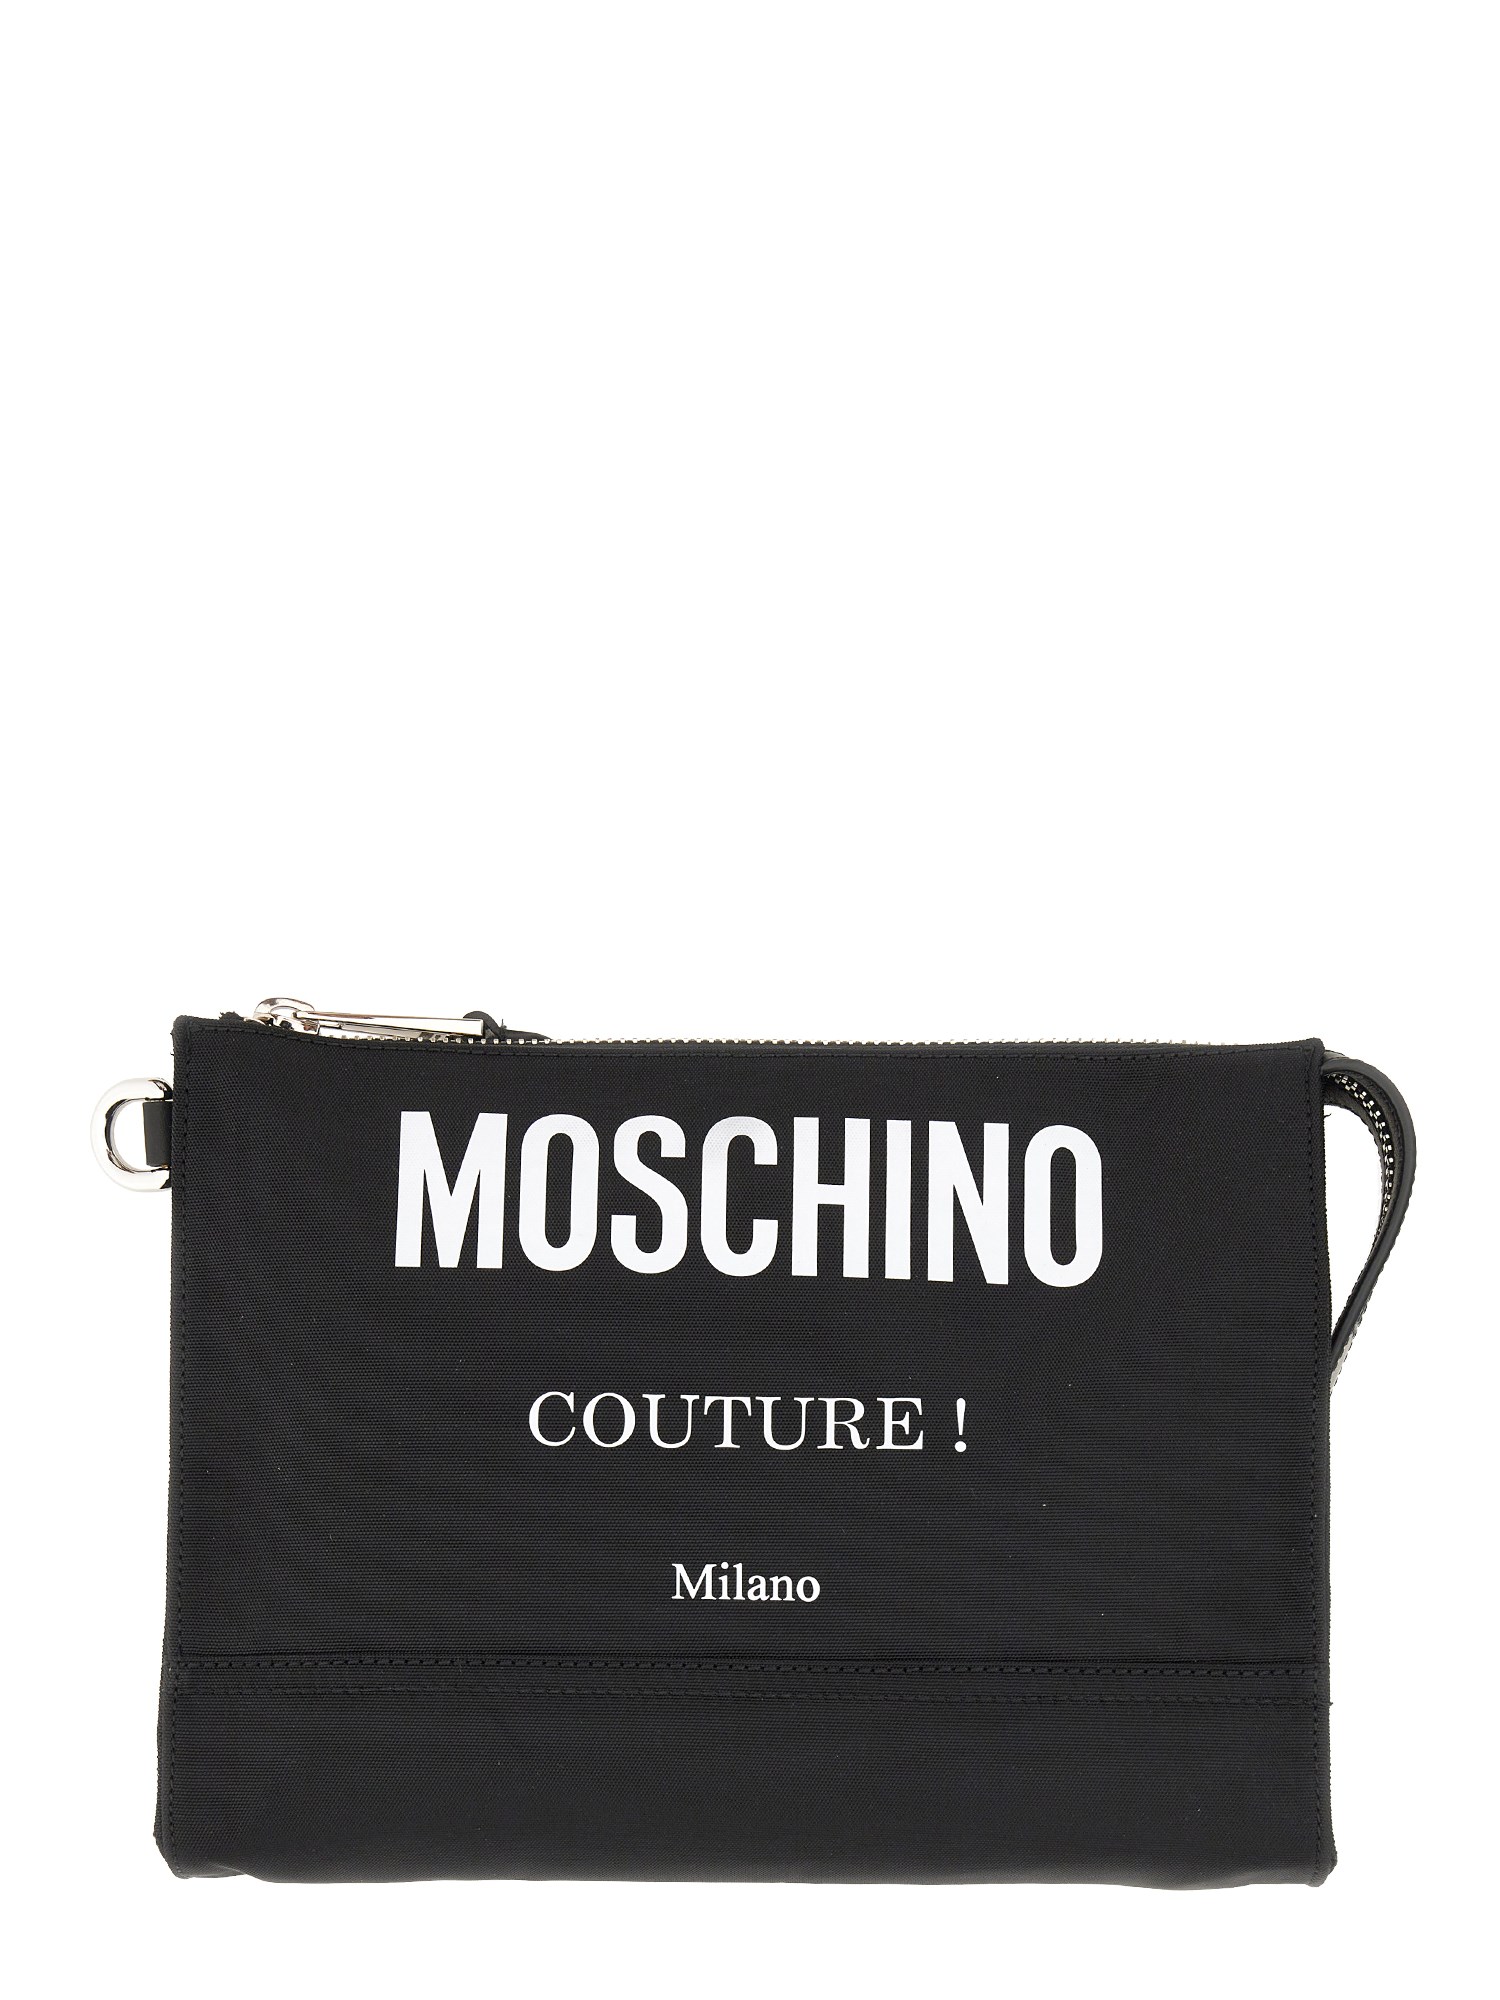 moschino clutch bag with logo